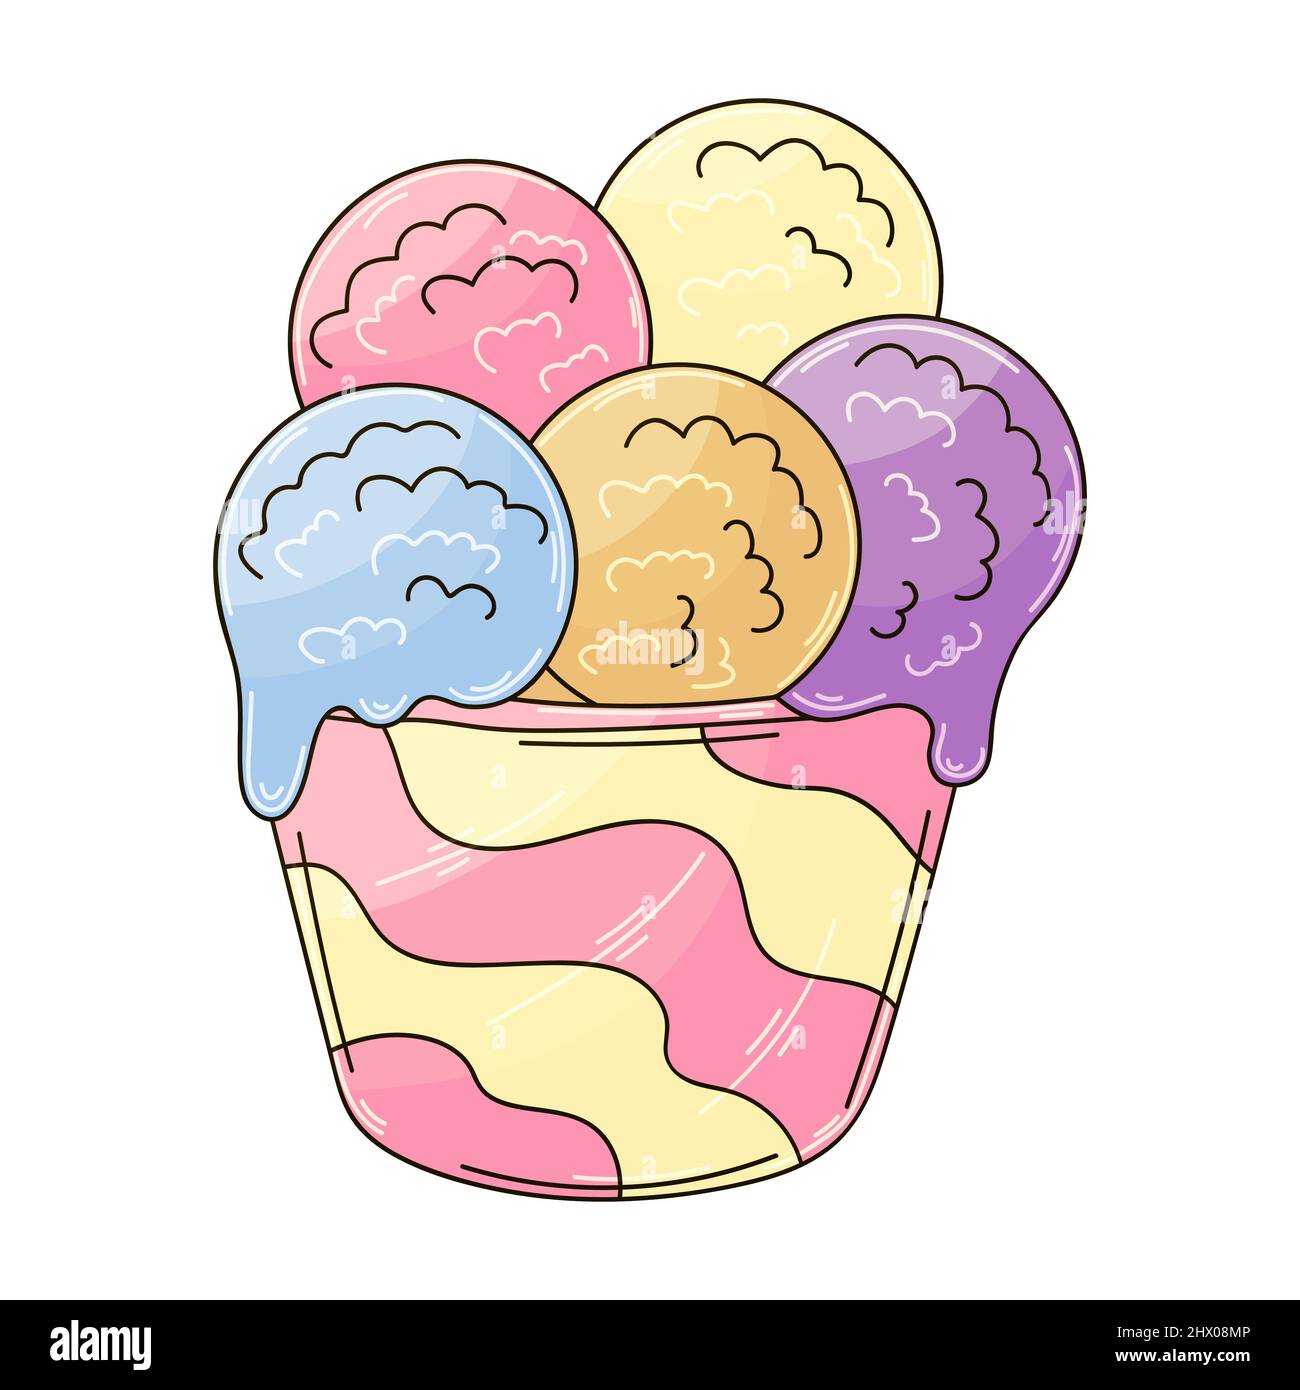 https://c8.alamy.com/comp/2HX08MP/sweet-dessert-graphic-element-for-your-design-illustration-in-hand-draw-style-ice-cream-bucket-icon-pin-sticker-sign-2HX08MP.jpg